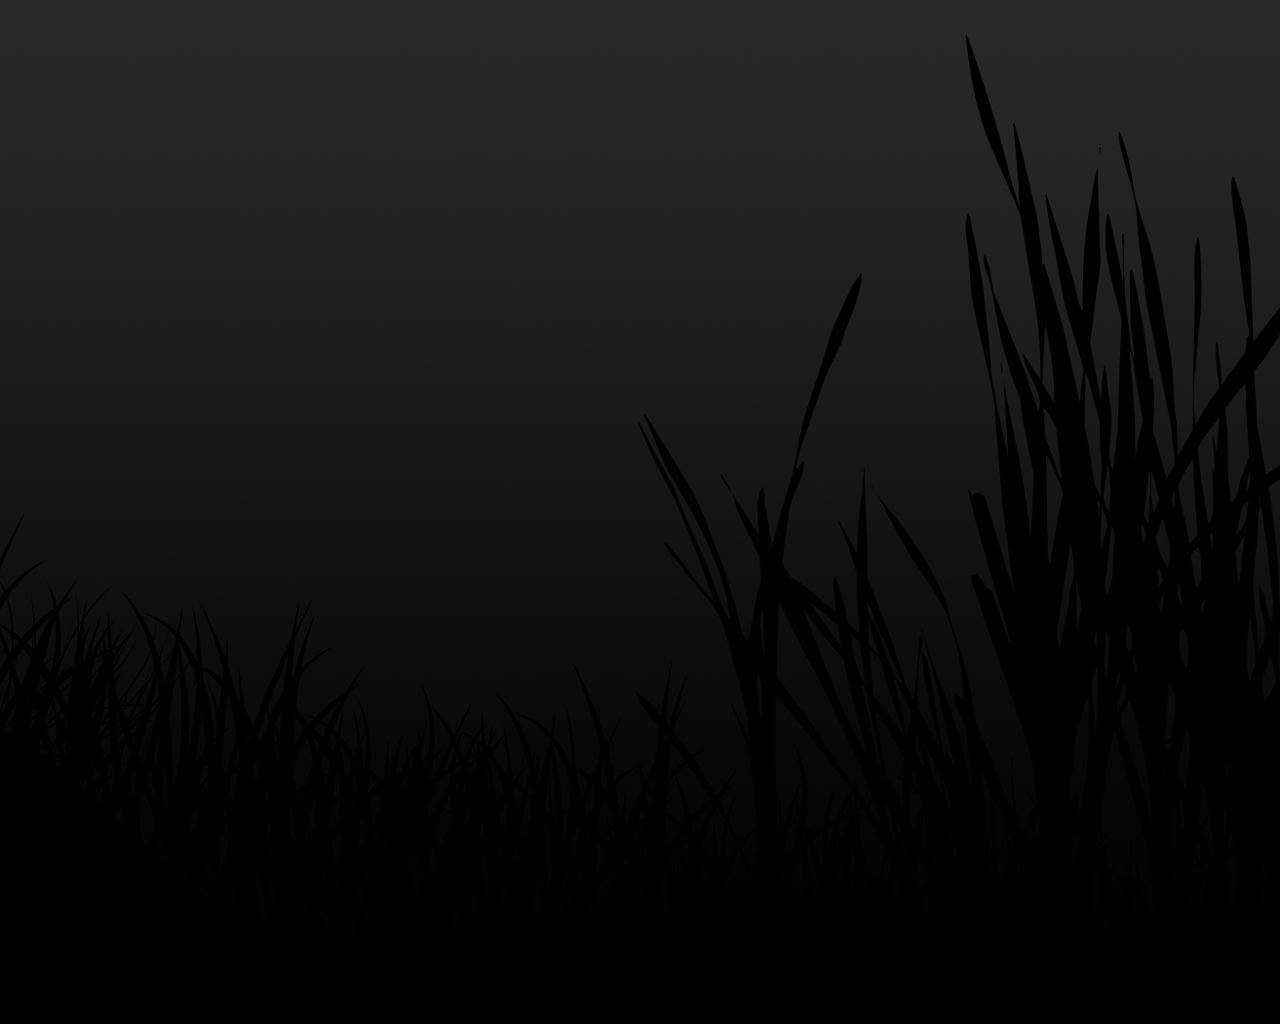 Plain Black Grass Pattern